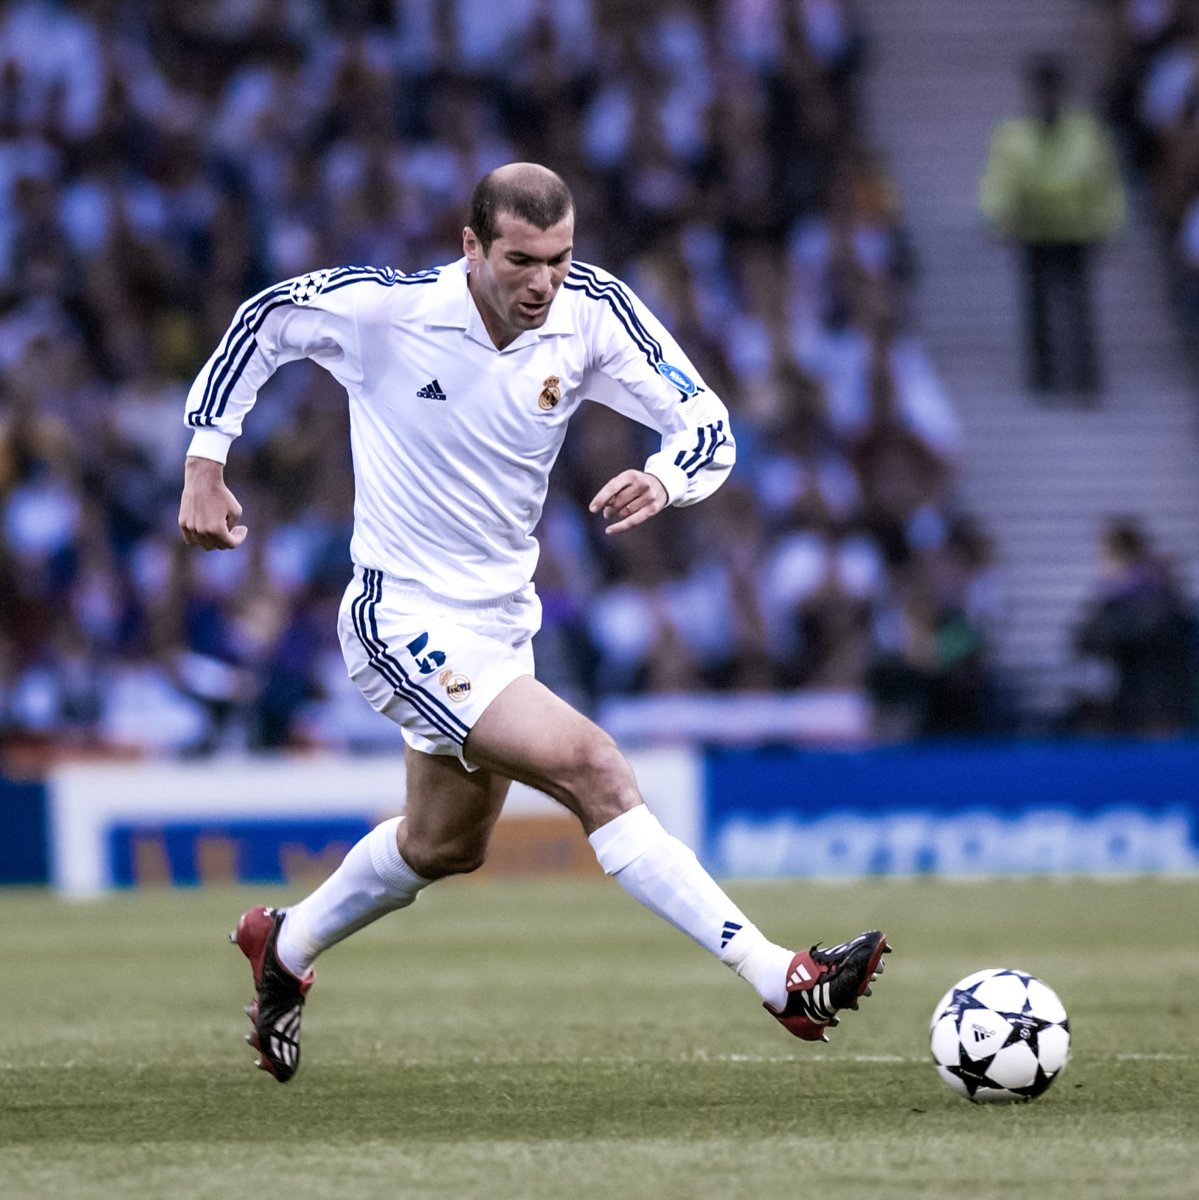 @ChampionsLeague's photo on Zinédine Zidane